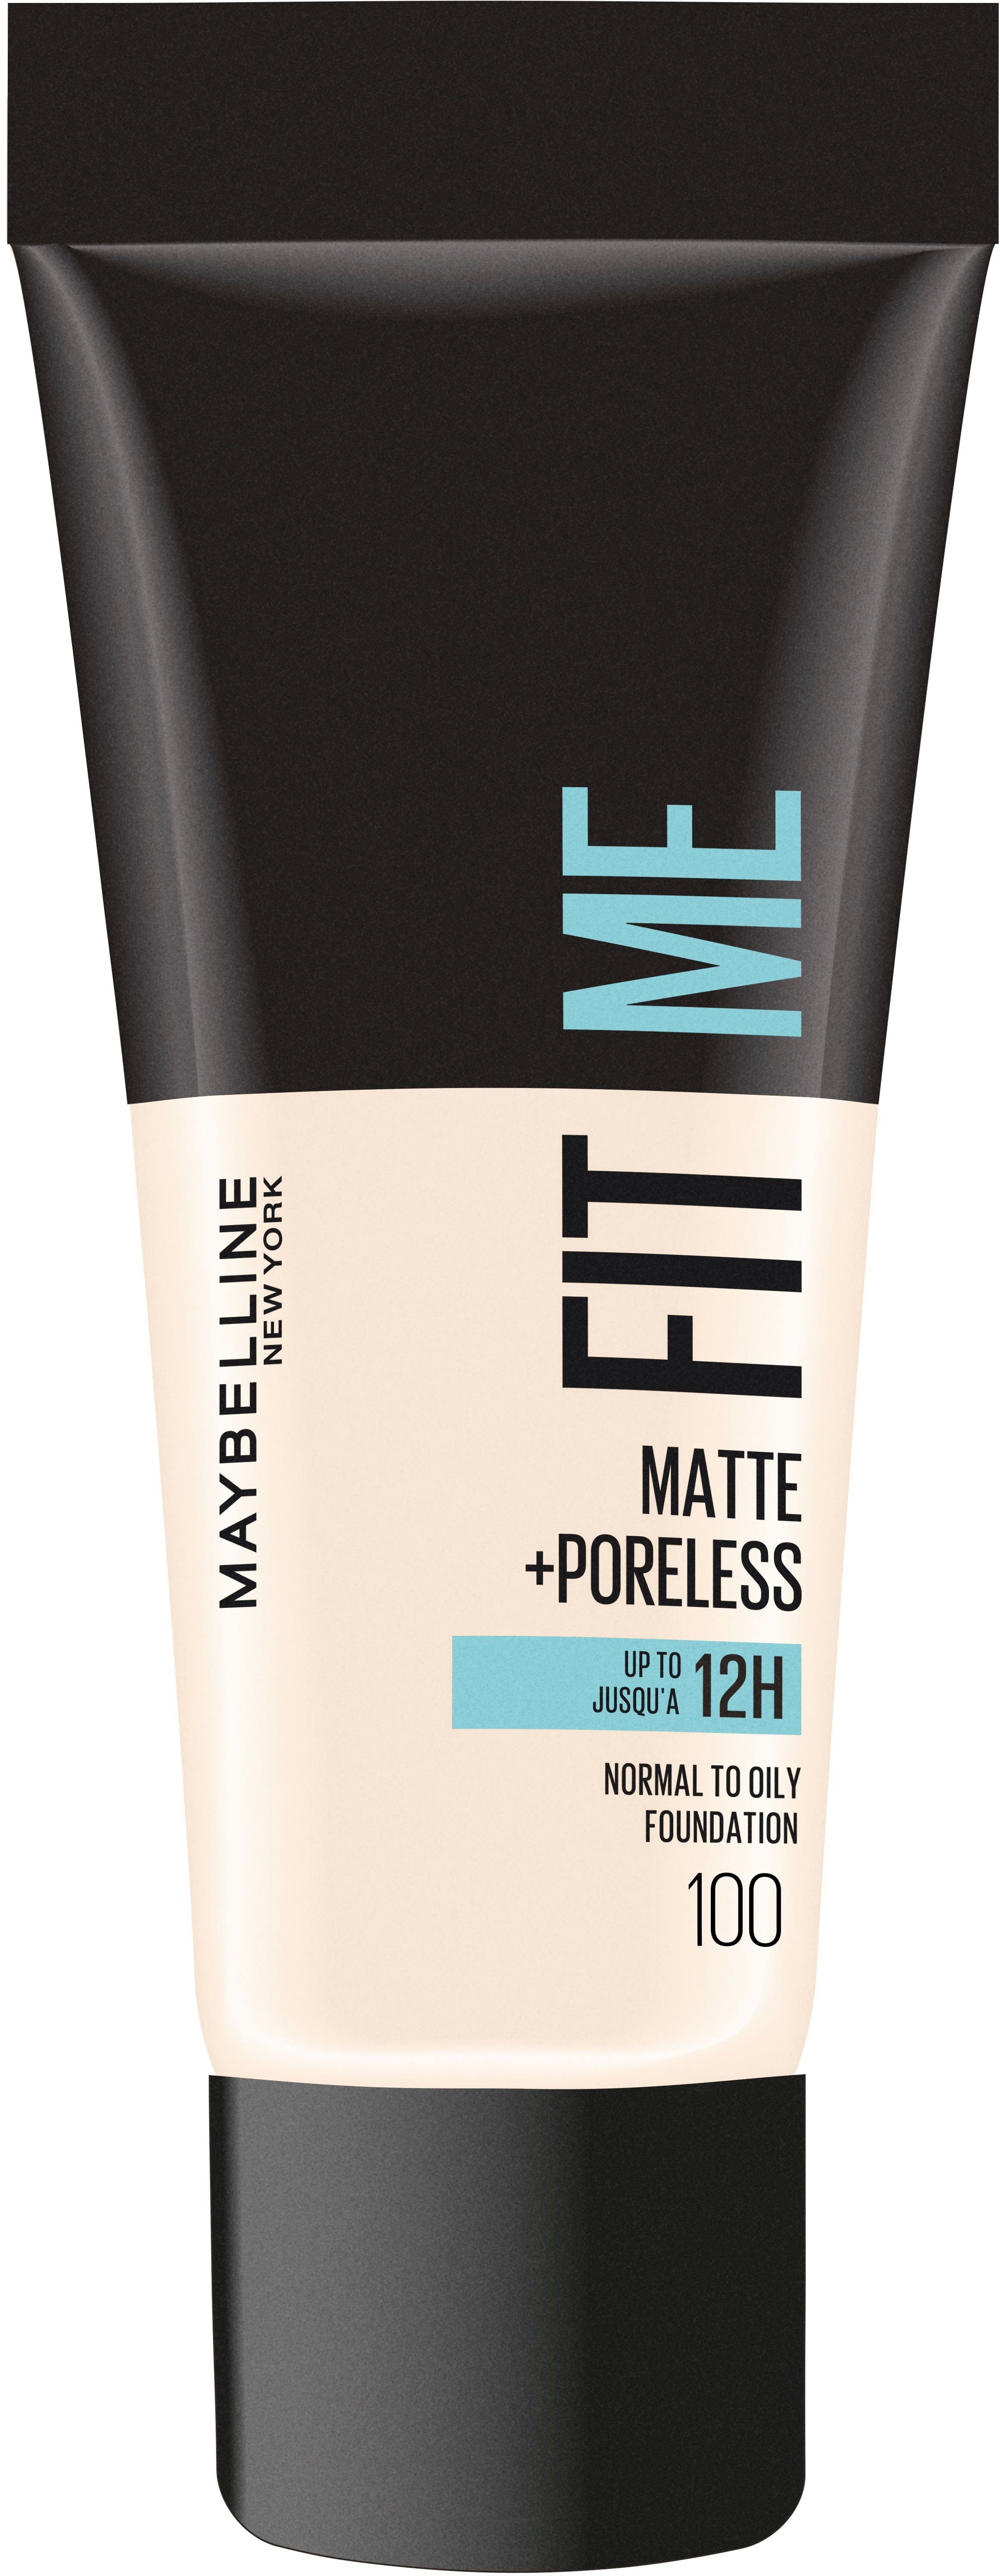 Poreless Maybelline YORK Matte Foundation Fit Me! NEW York New MAYBELLINE Make-Up +